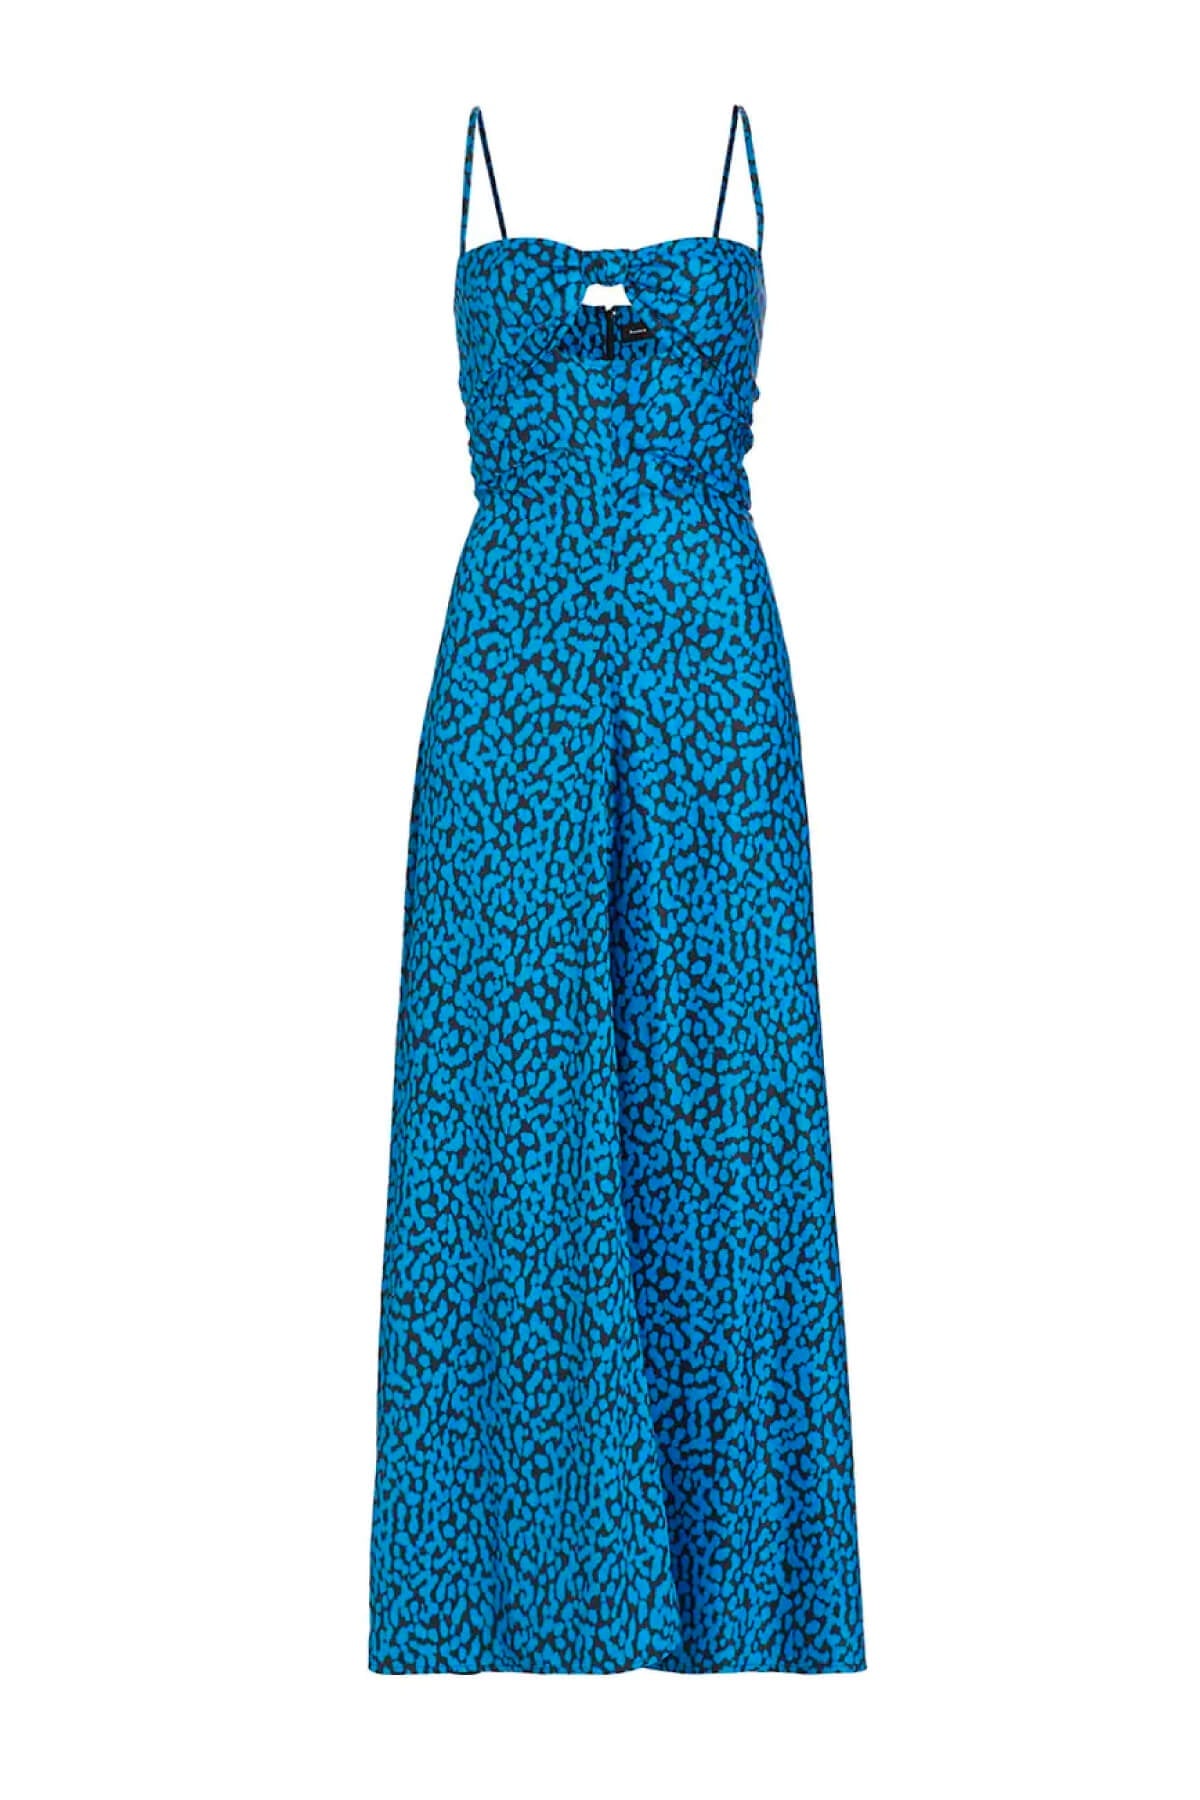 Proenza Schouler Printed Leopard Tank Dress - Turquoise Multi